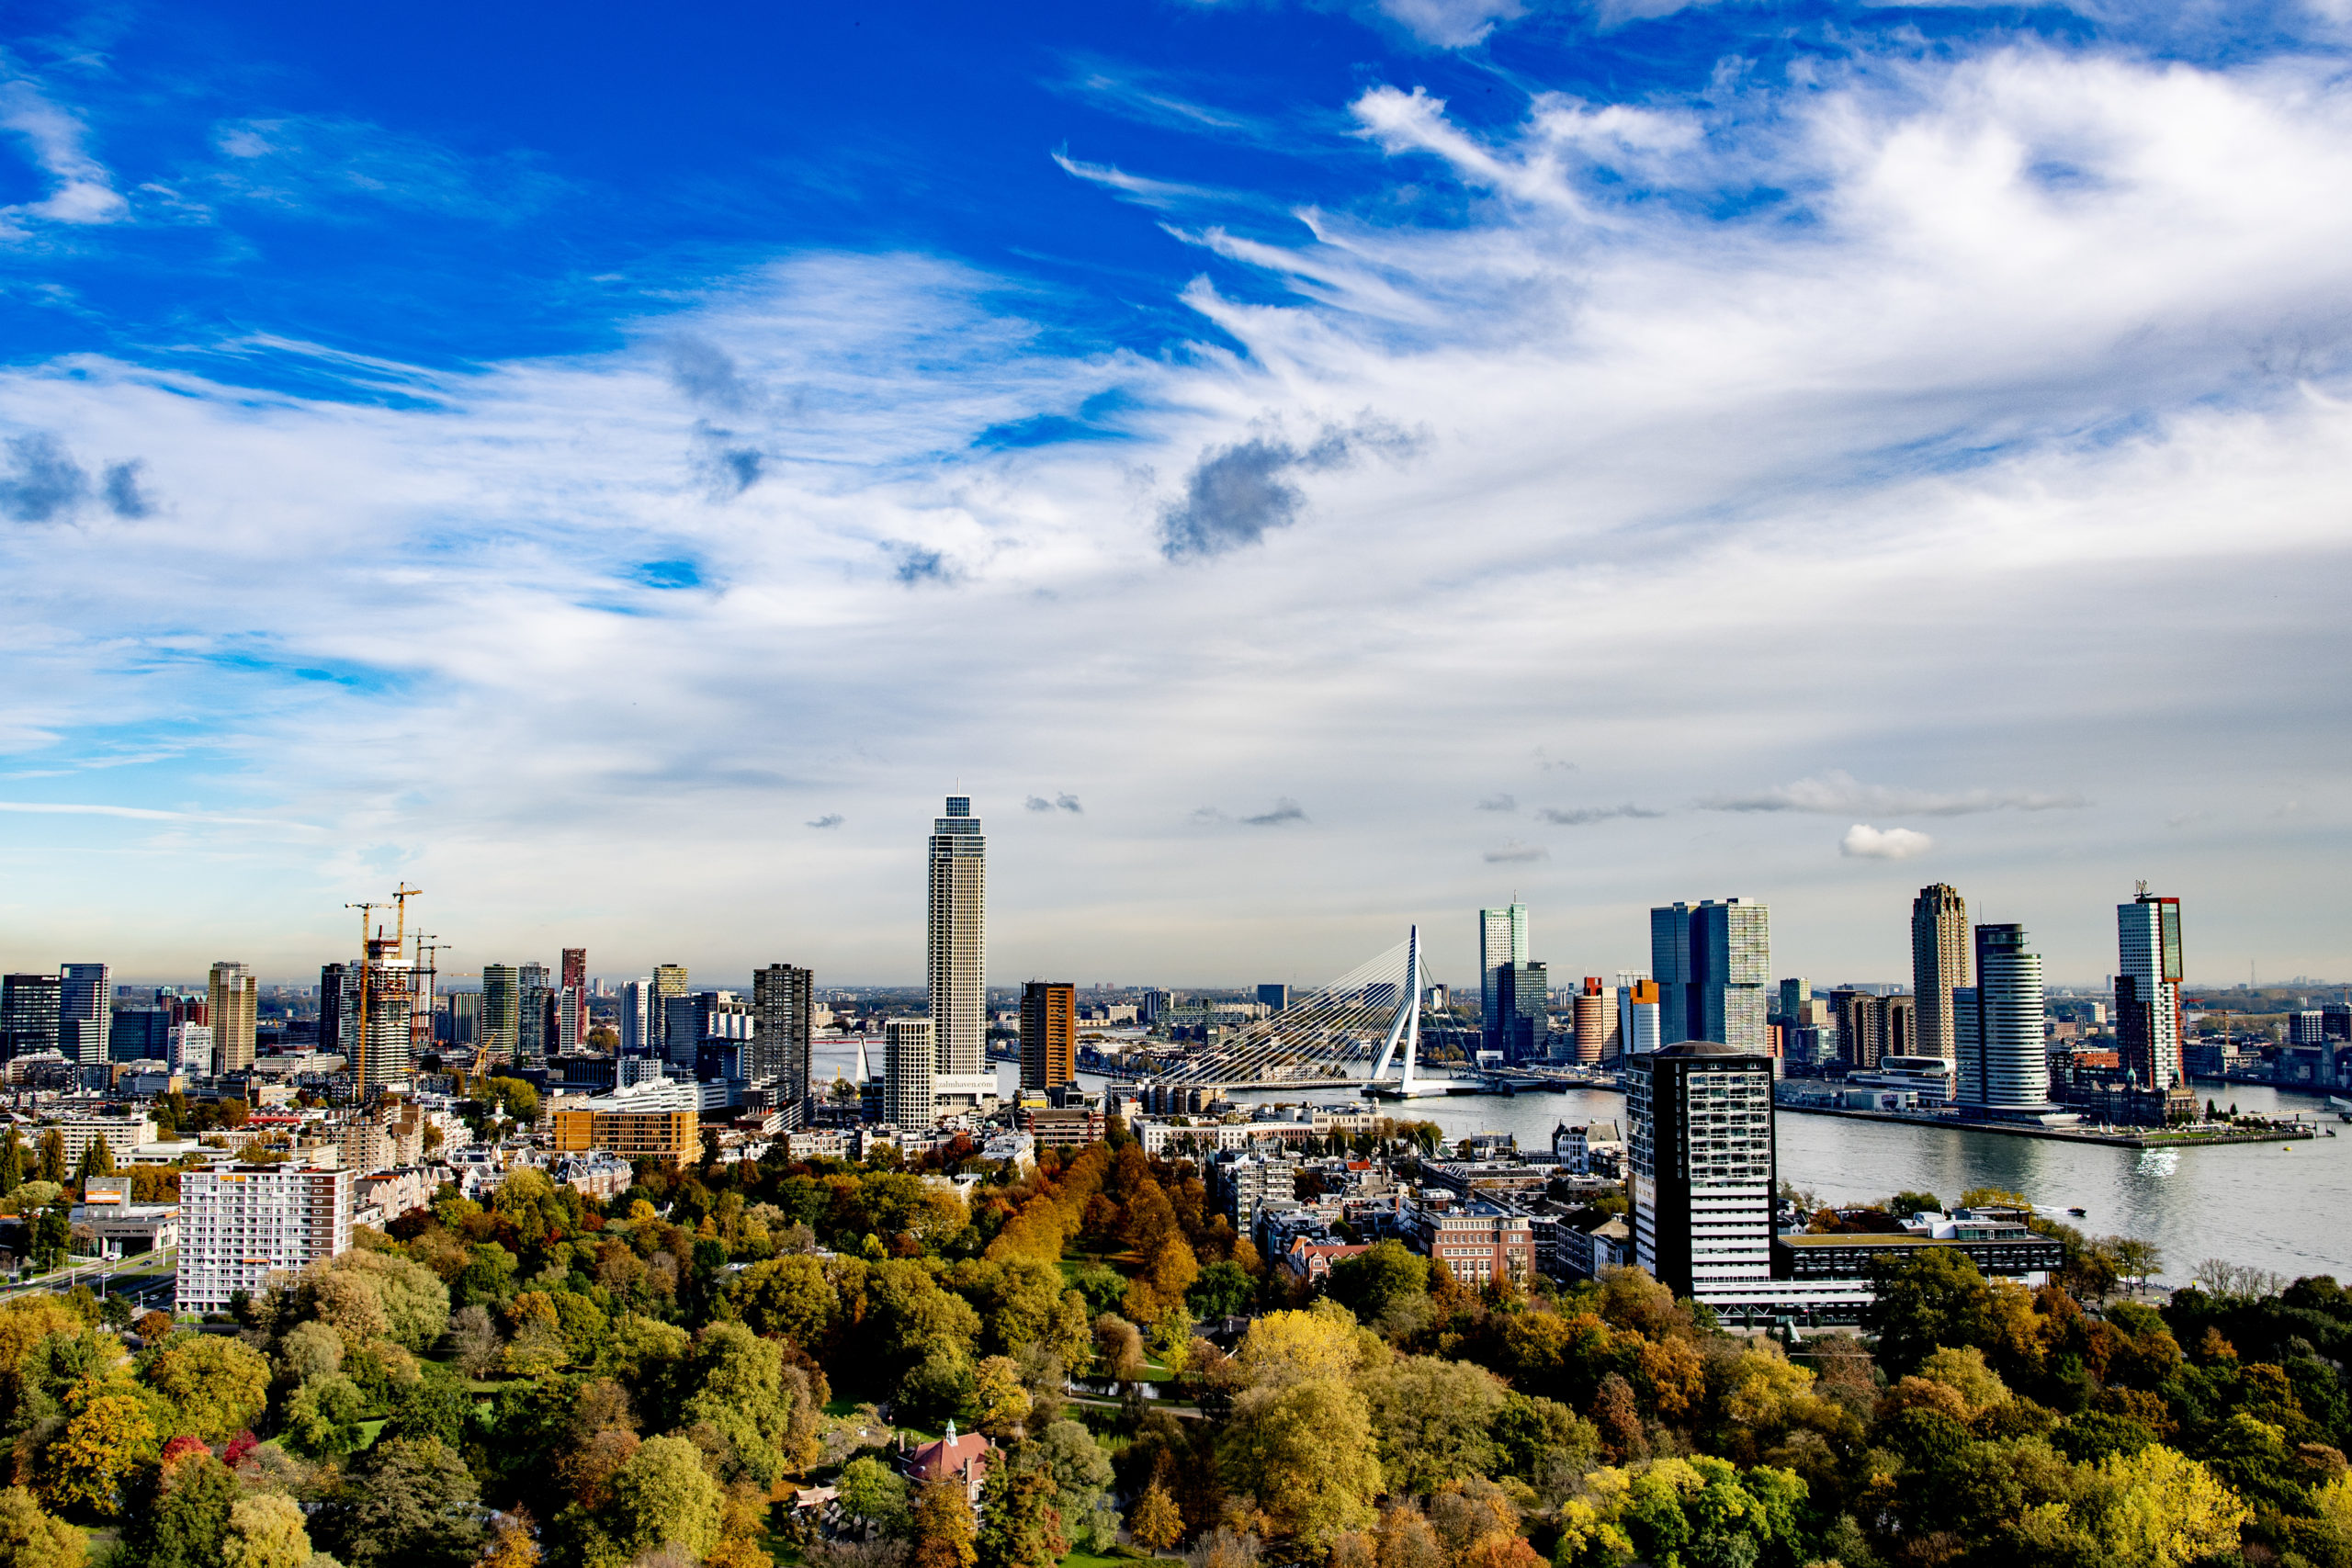 Skyline van Rotterdam, met groen en gebouwen in beeld - Nationale Klimaatweek